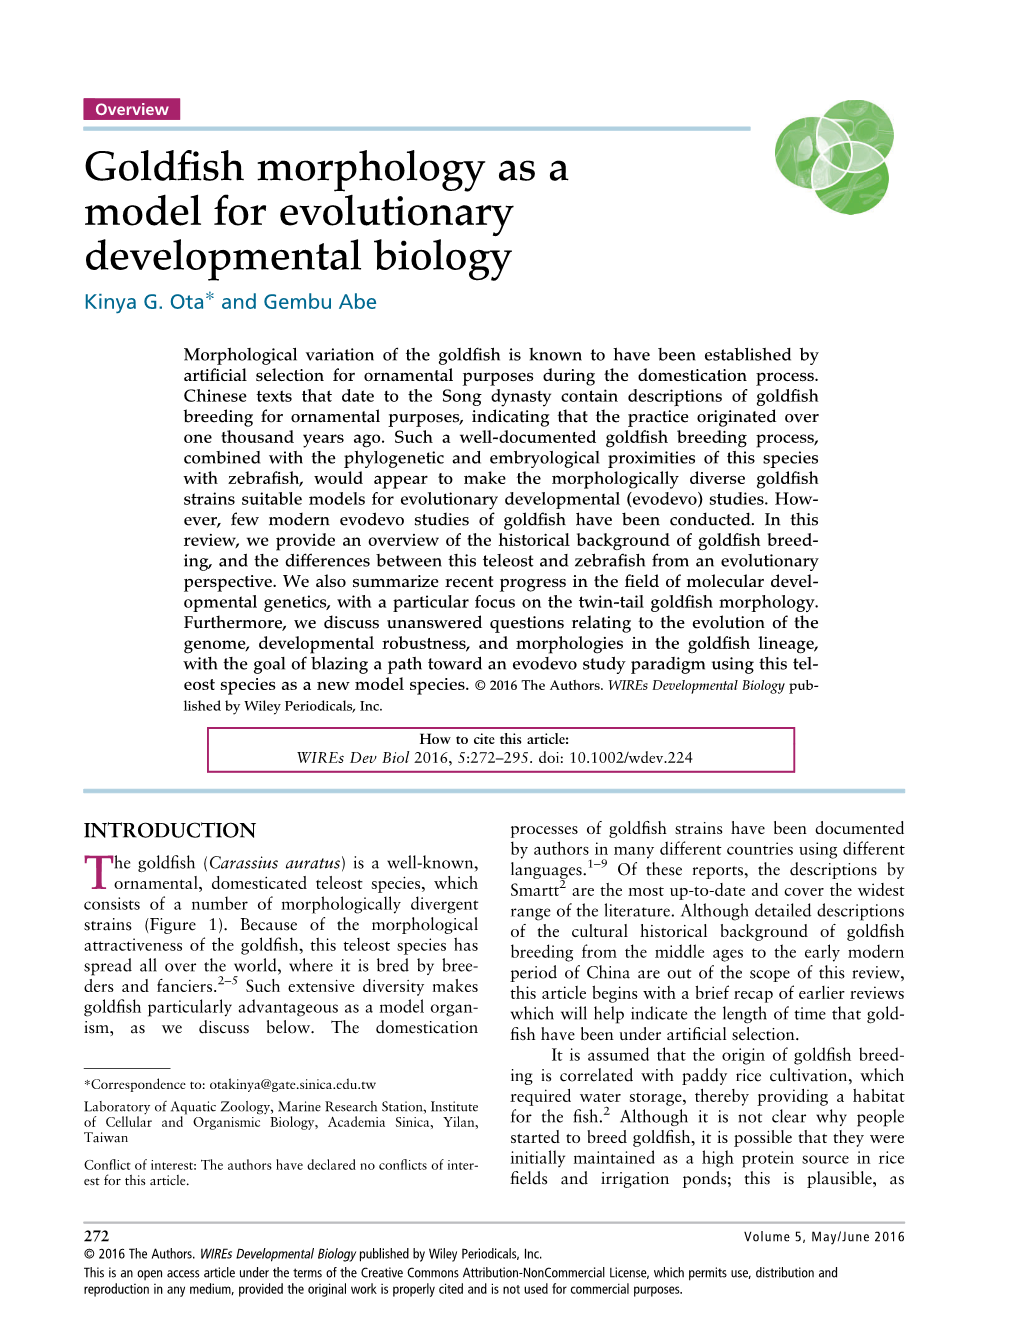 Goldfish Morphology As a Model for Evolutionary Developmental Biology